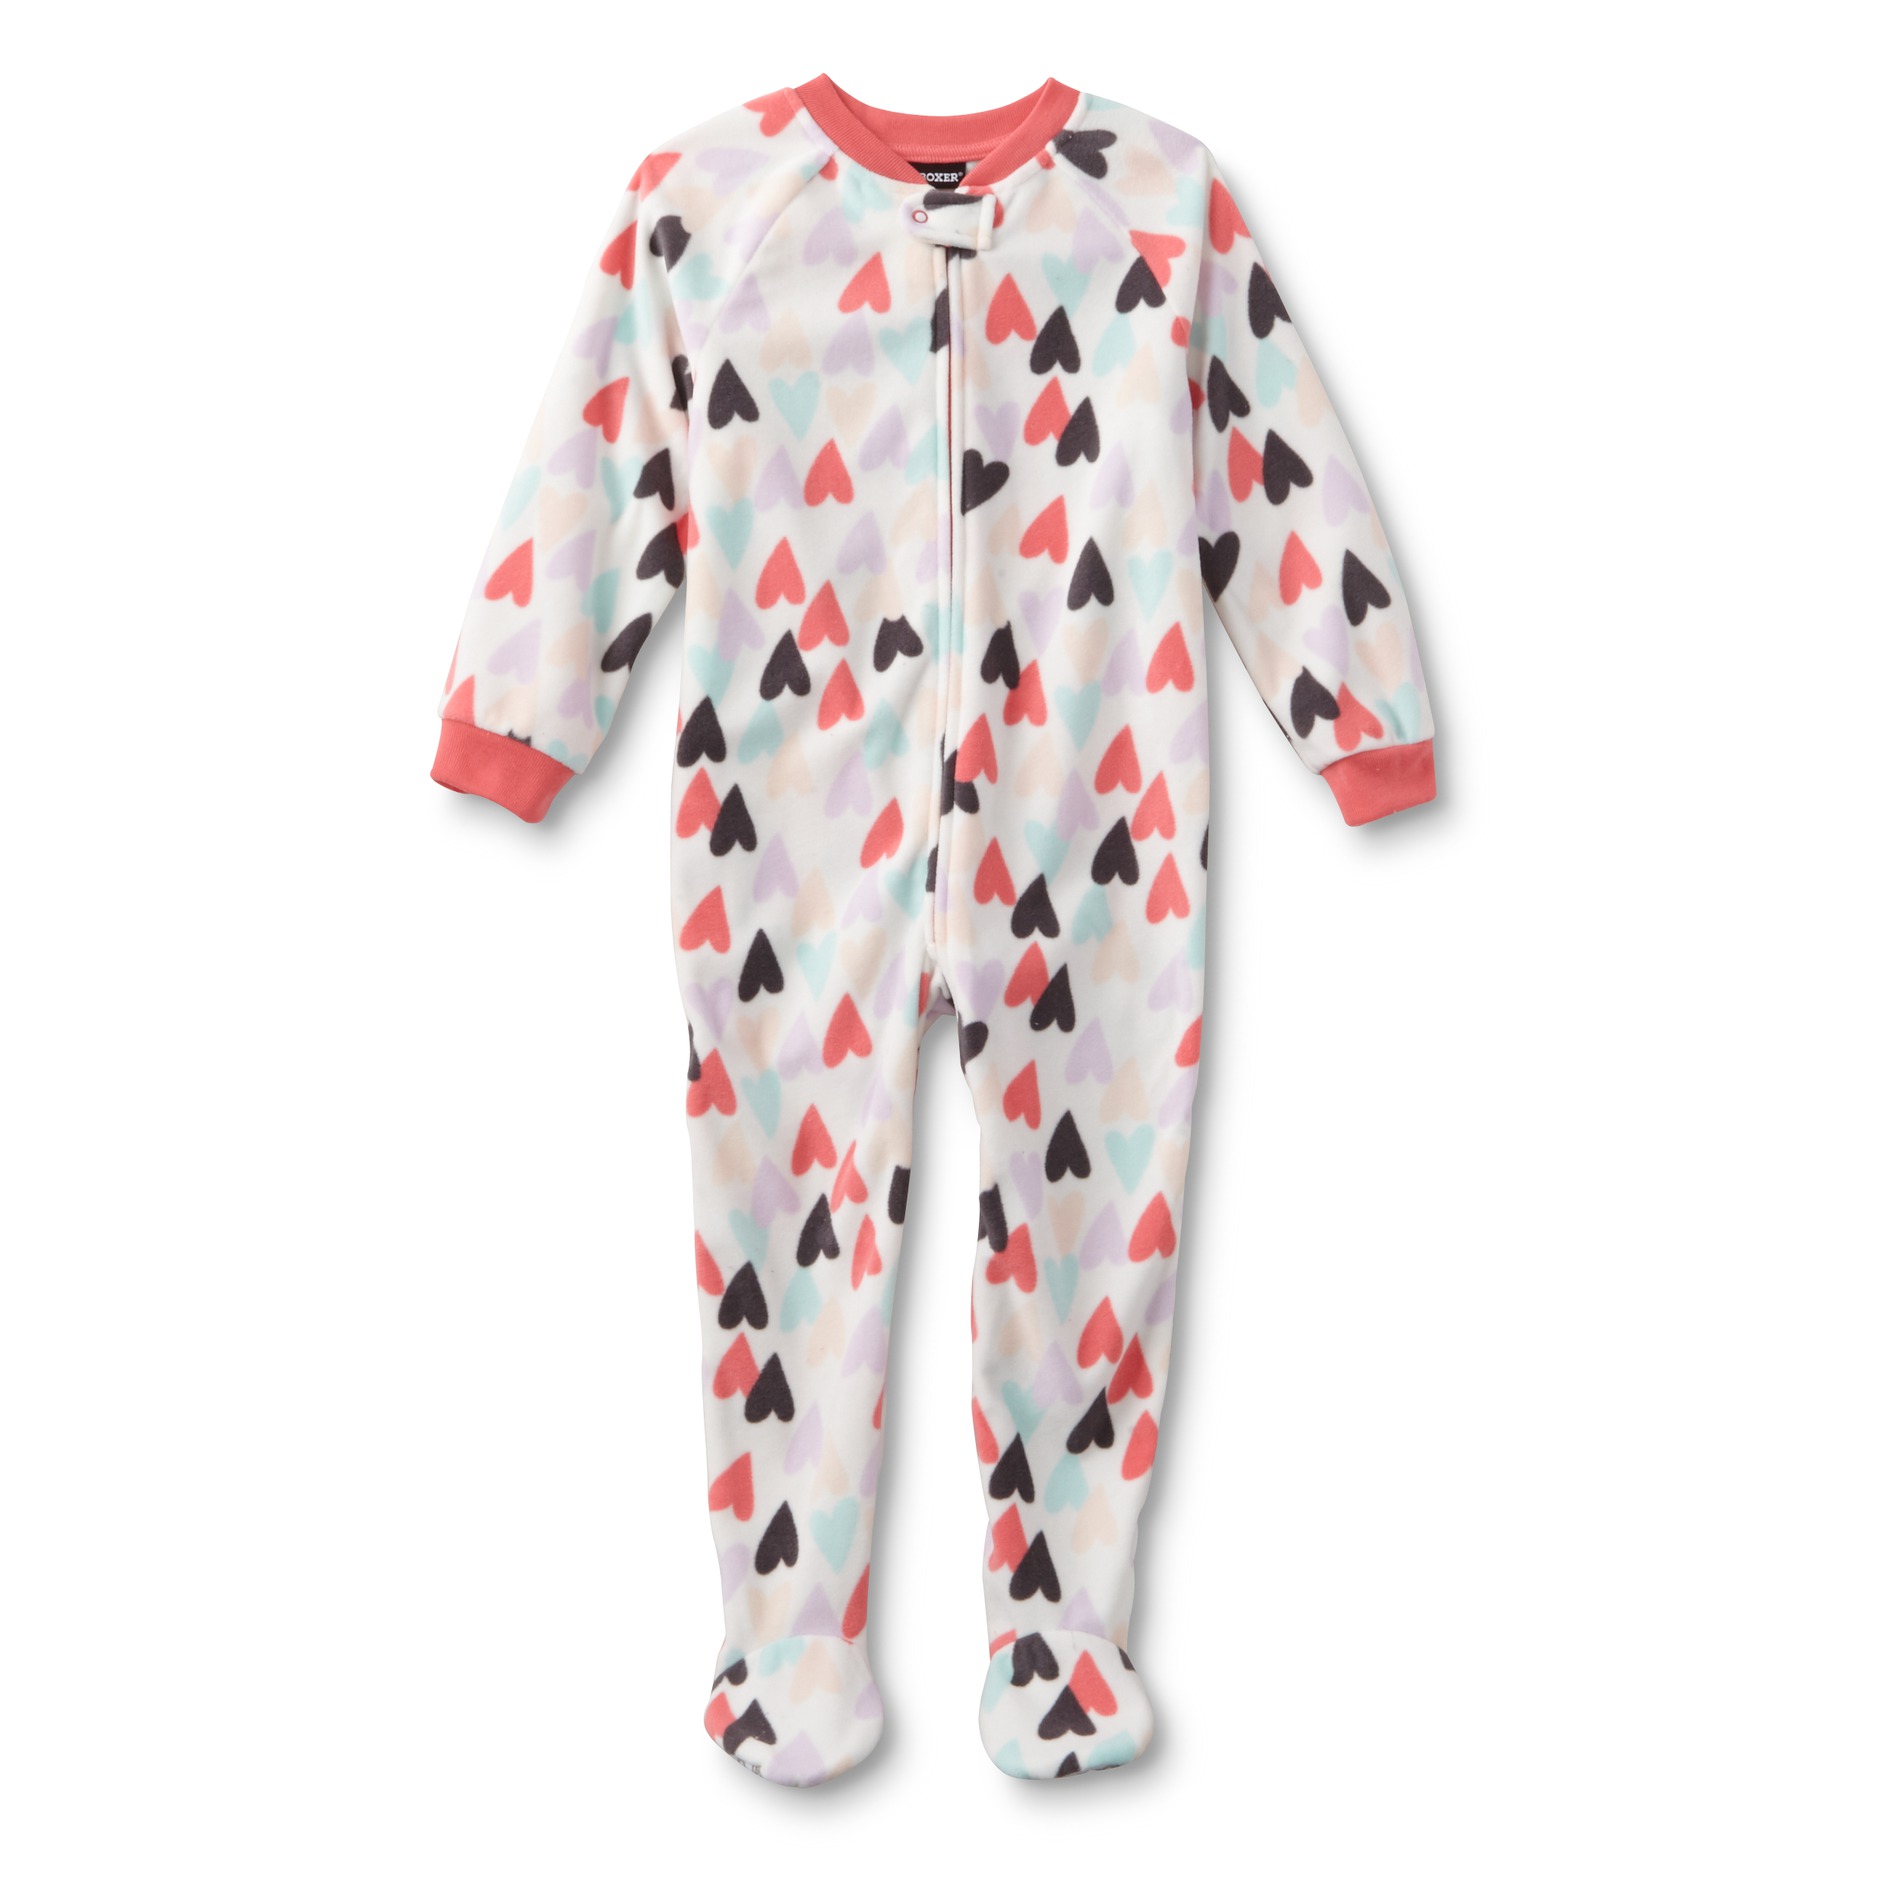 Joe Boxer Infant & Toddler Girl's Sleeper Pajamas - Hearts